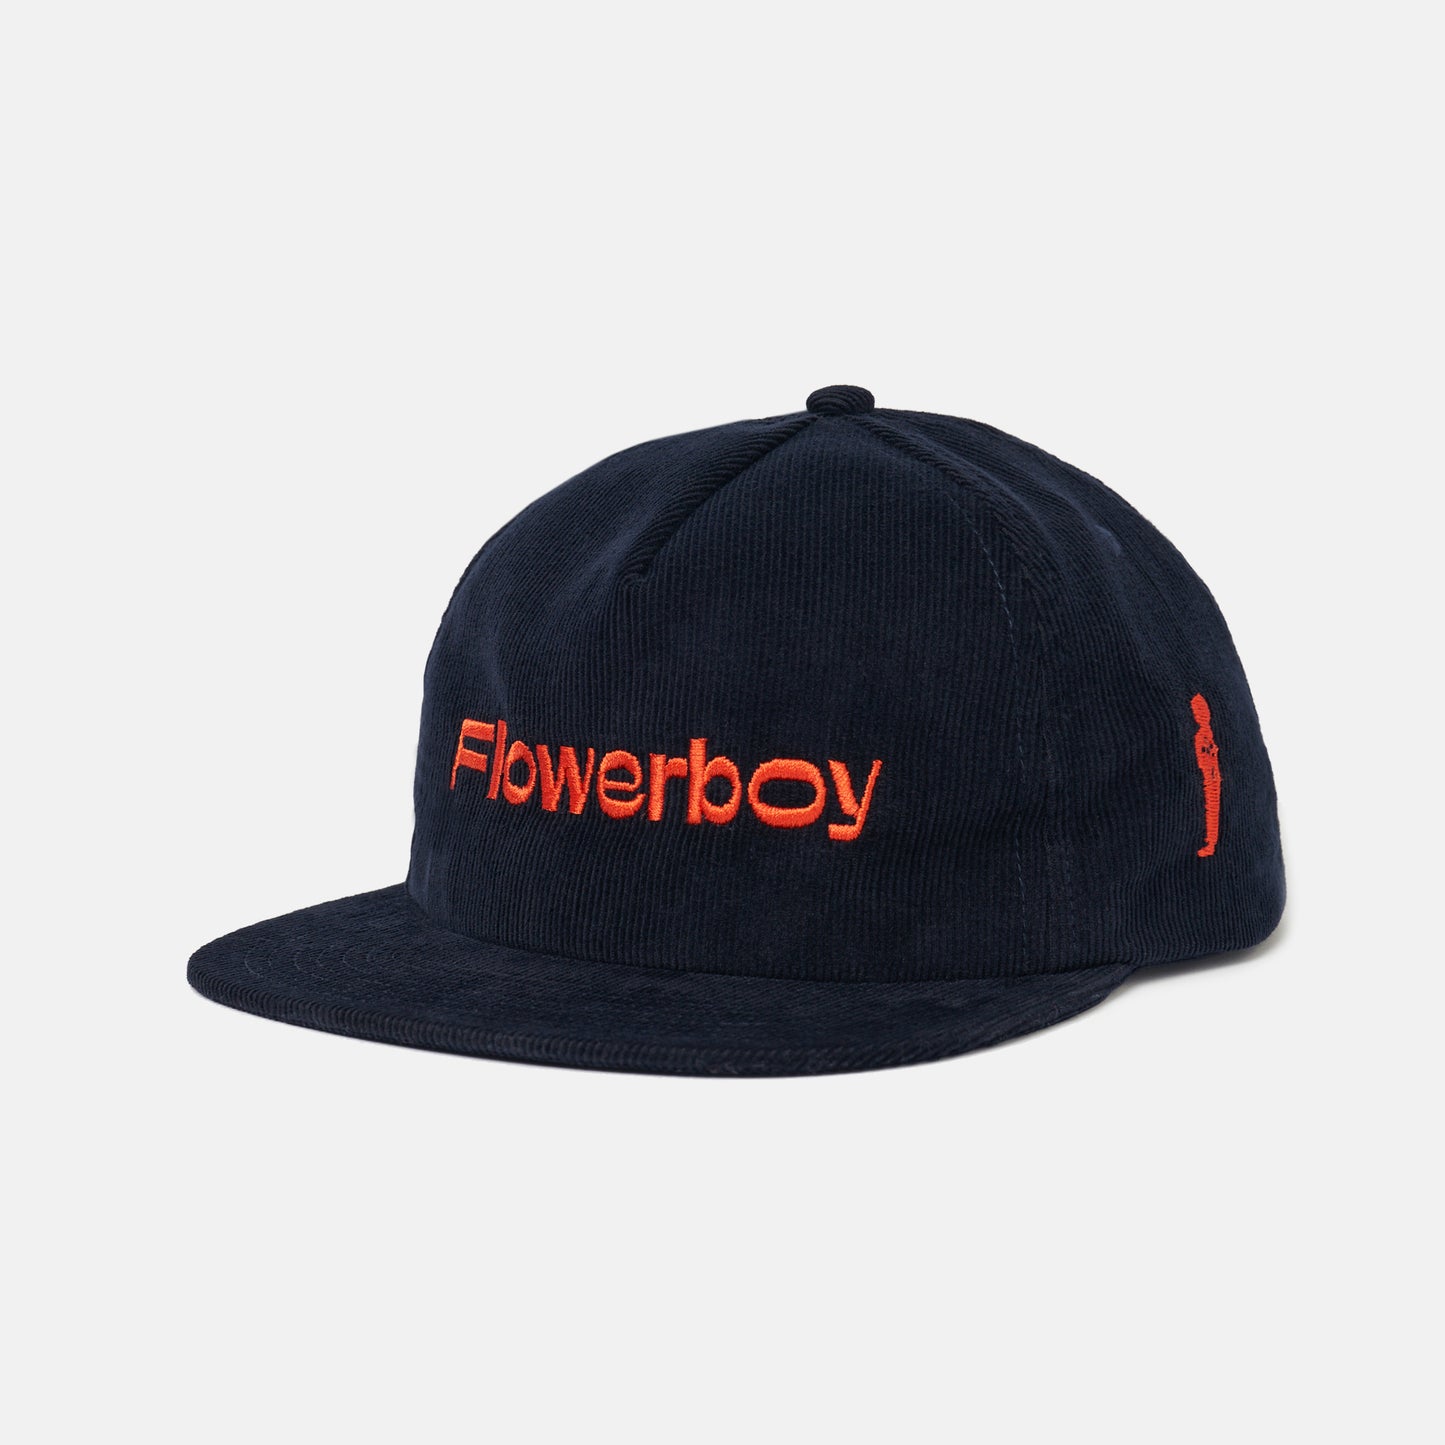 FLOWERBOY PROJECT EMBROIDERED LOGO DAD HAT NAVY & ORANGE - Front